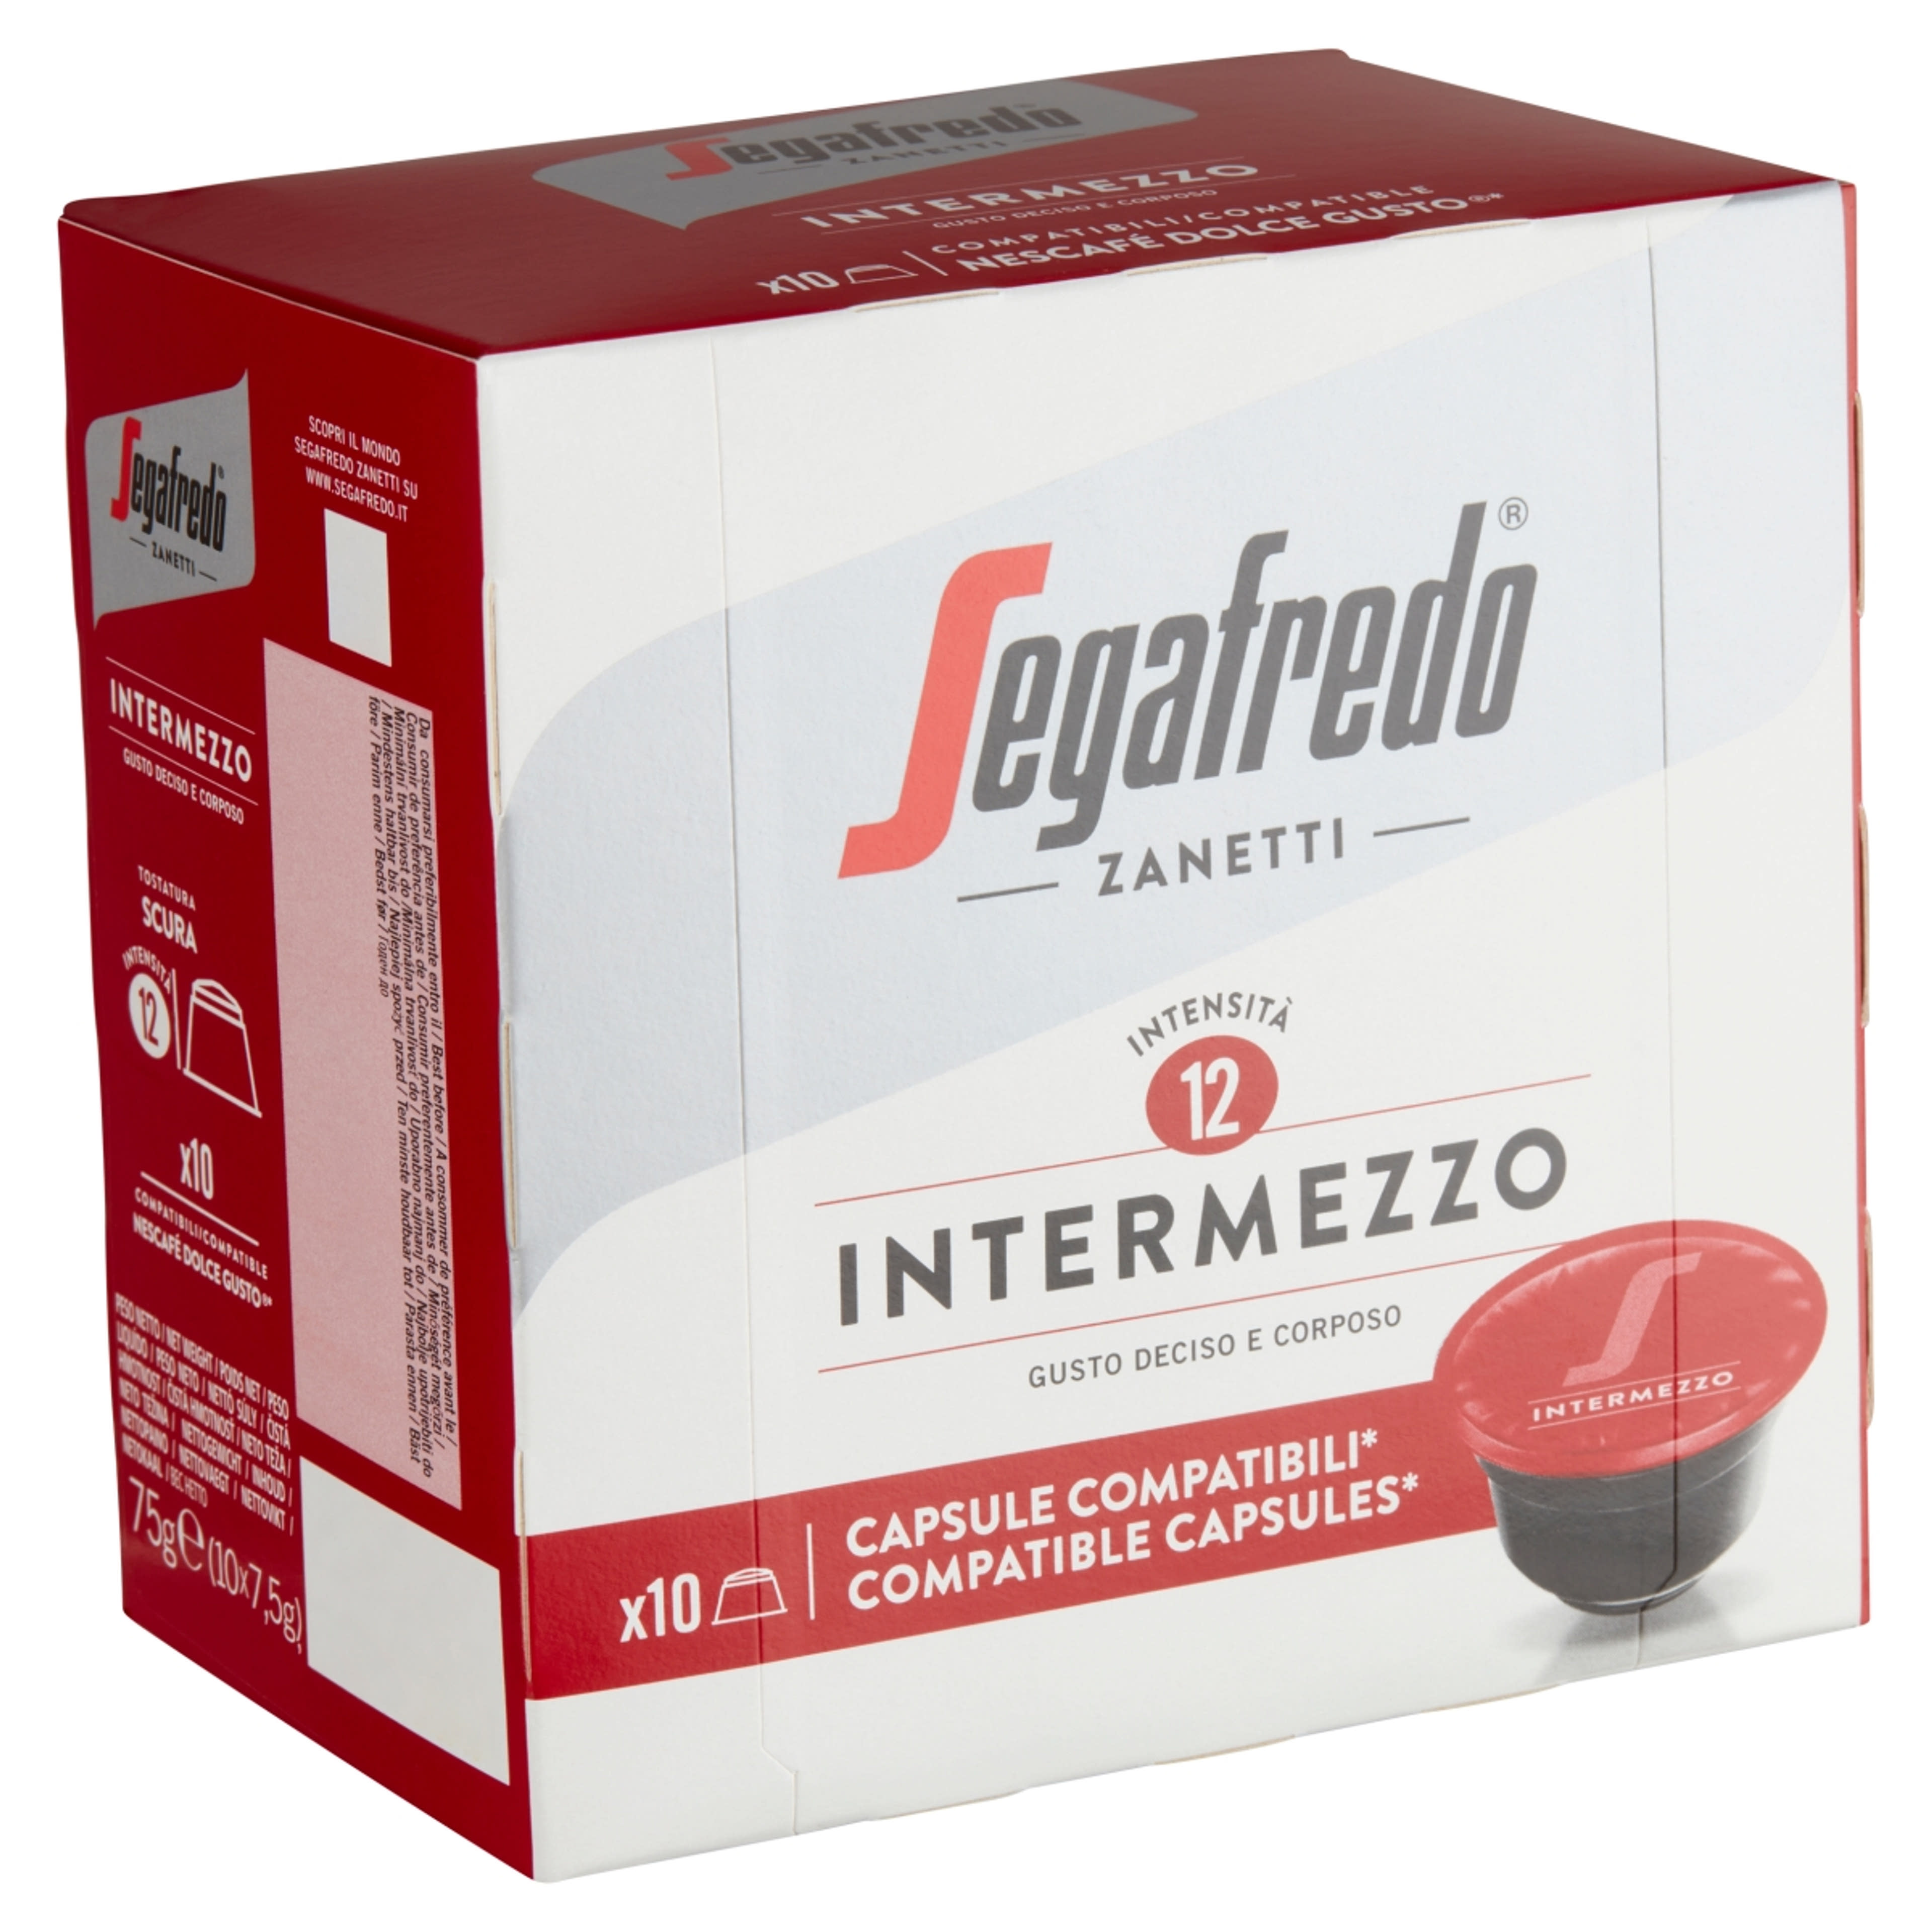 Segafredo dg intermezzo kávé kapszula 10 x 7.5 g - 75 g-3